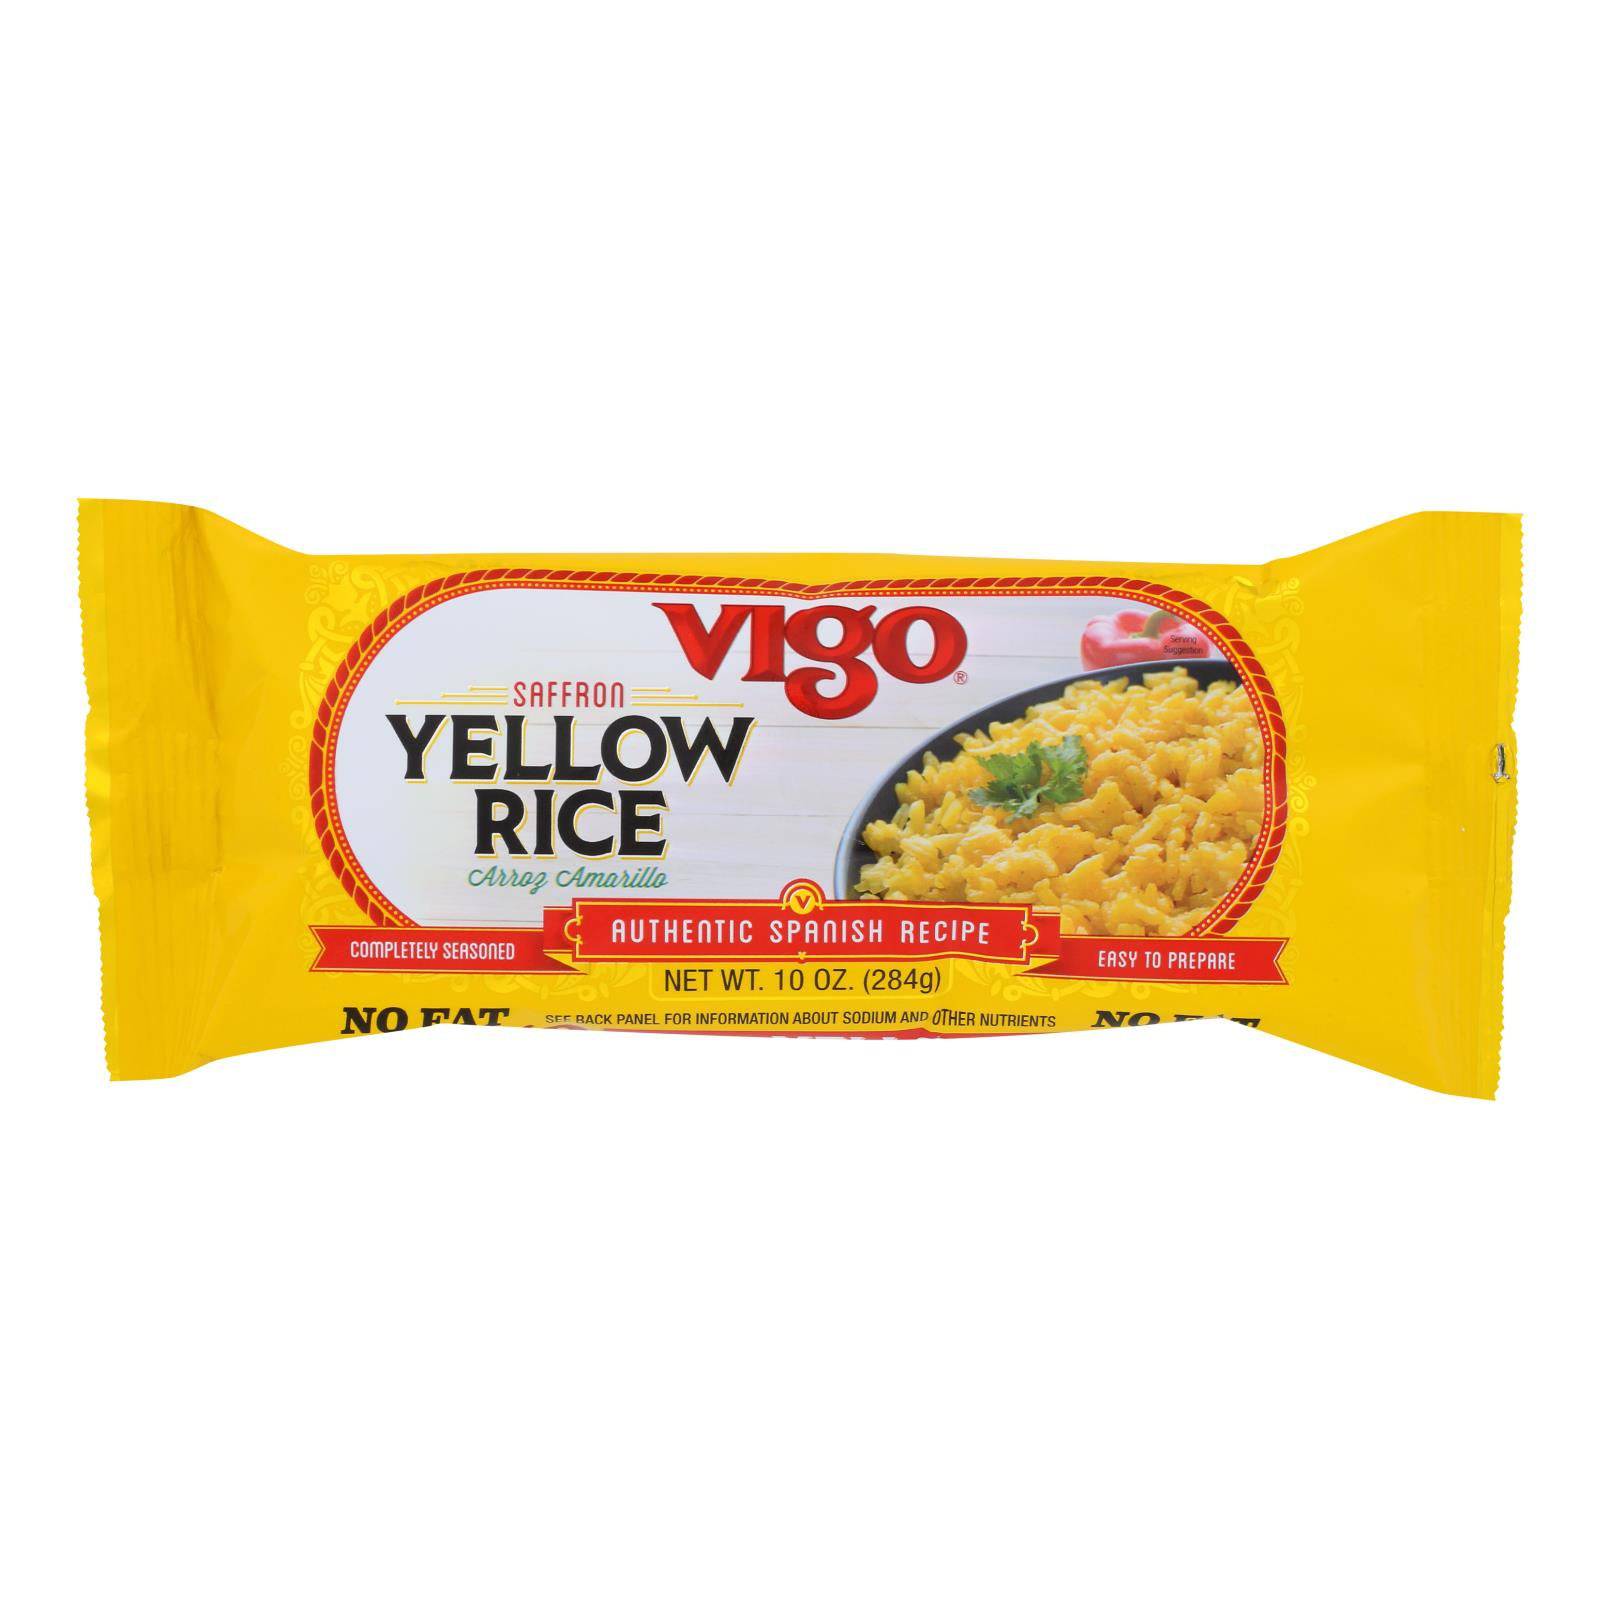 Buy Vigo Yellow Rice - Case Of 12 - 10 Oz.  at OnlyNaturals.us